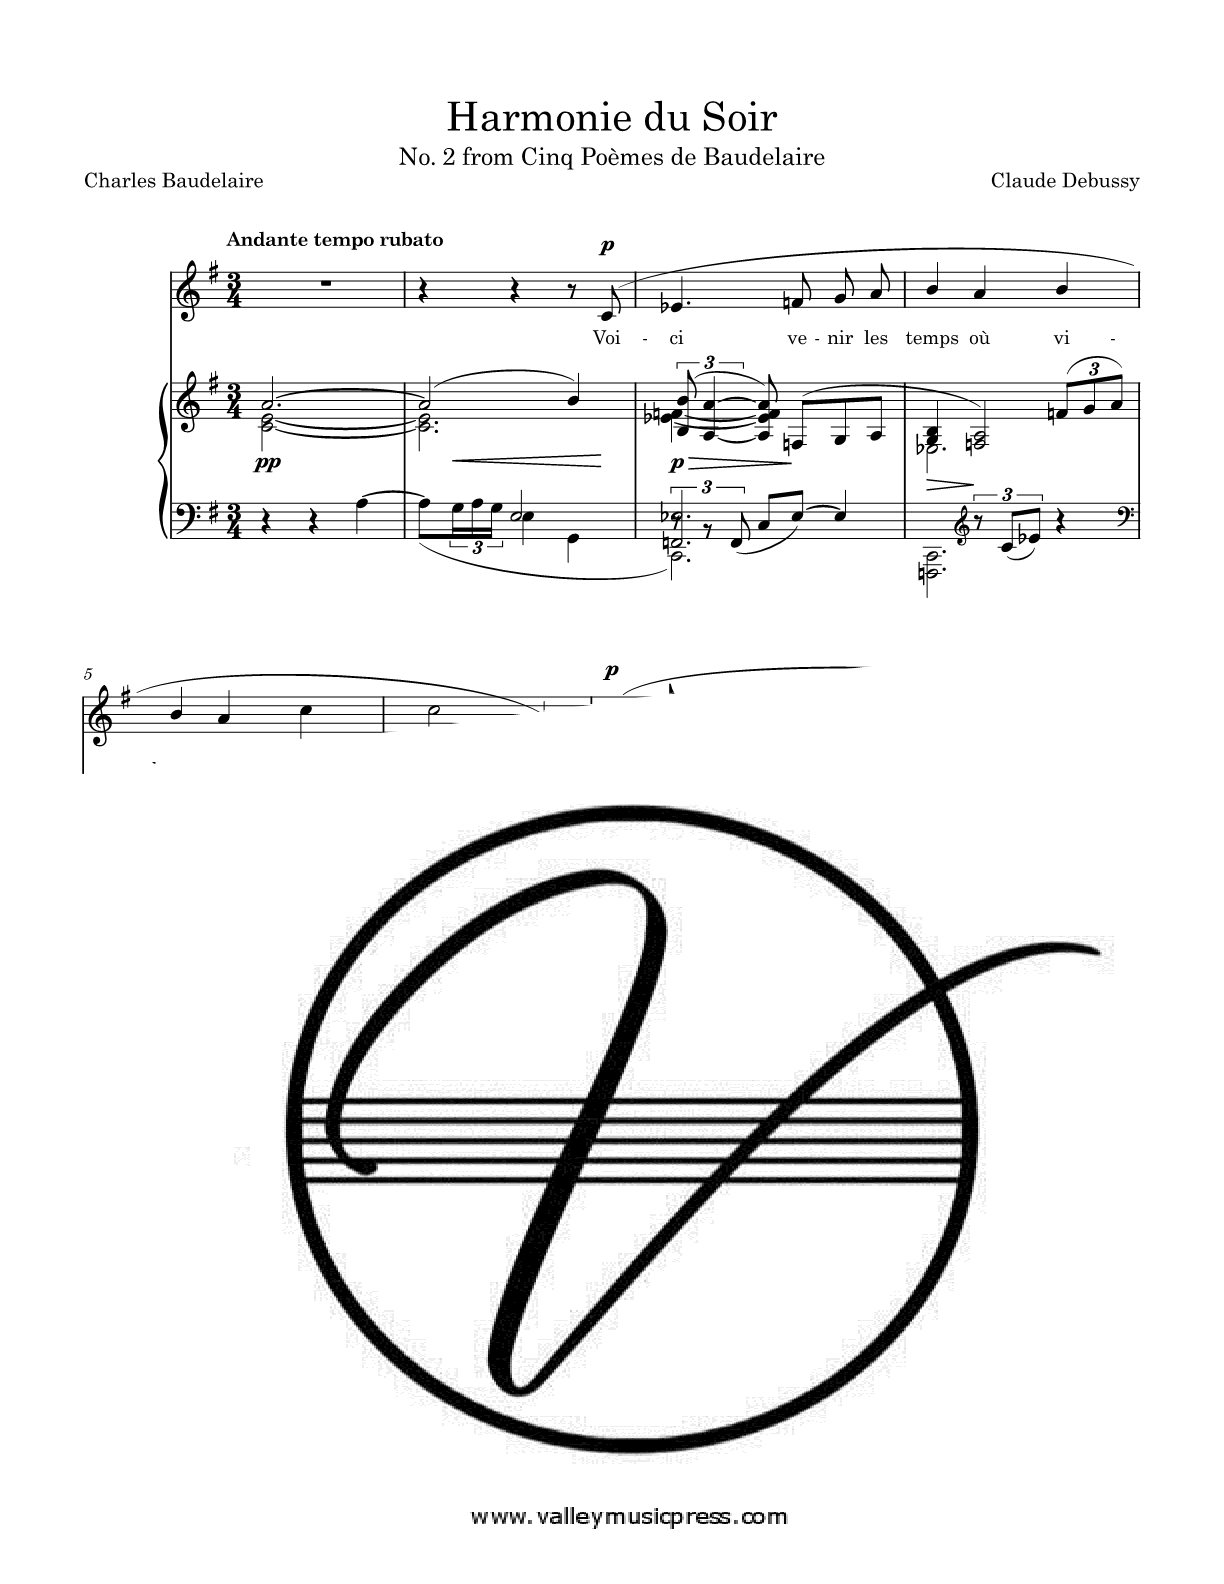 Debussy - Harmonie du Soir (Voice)